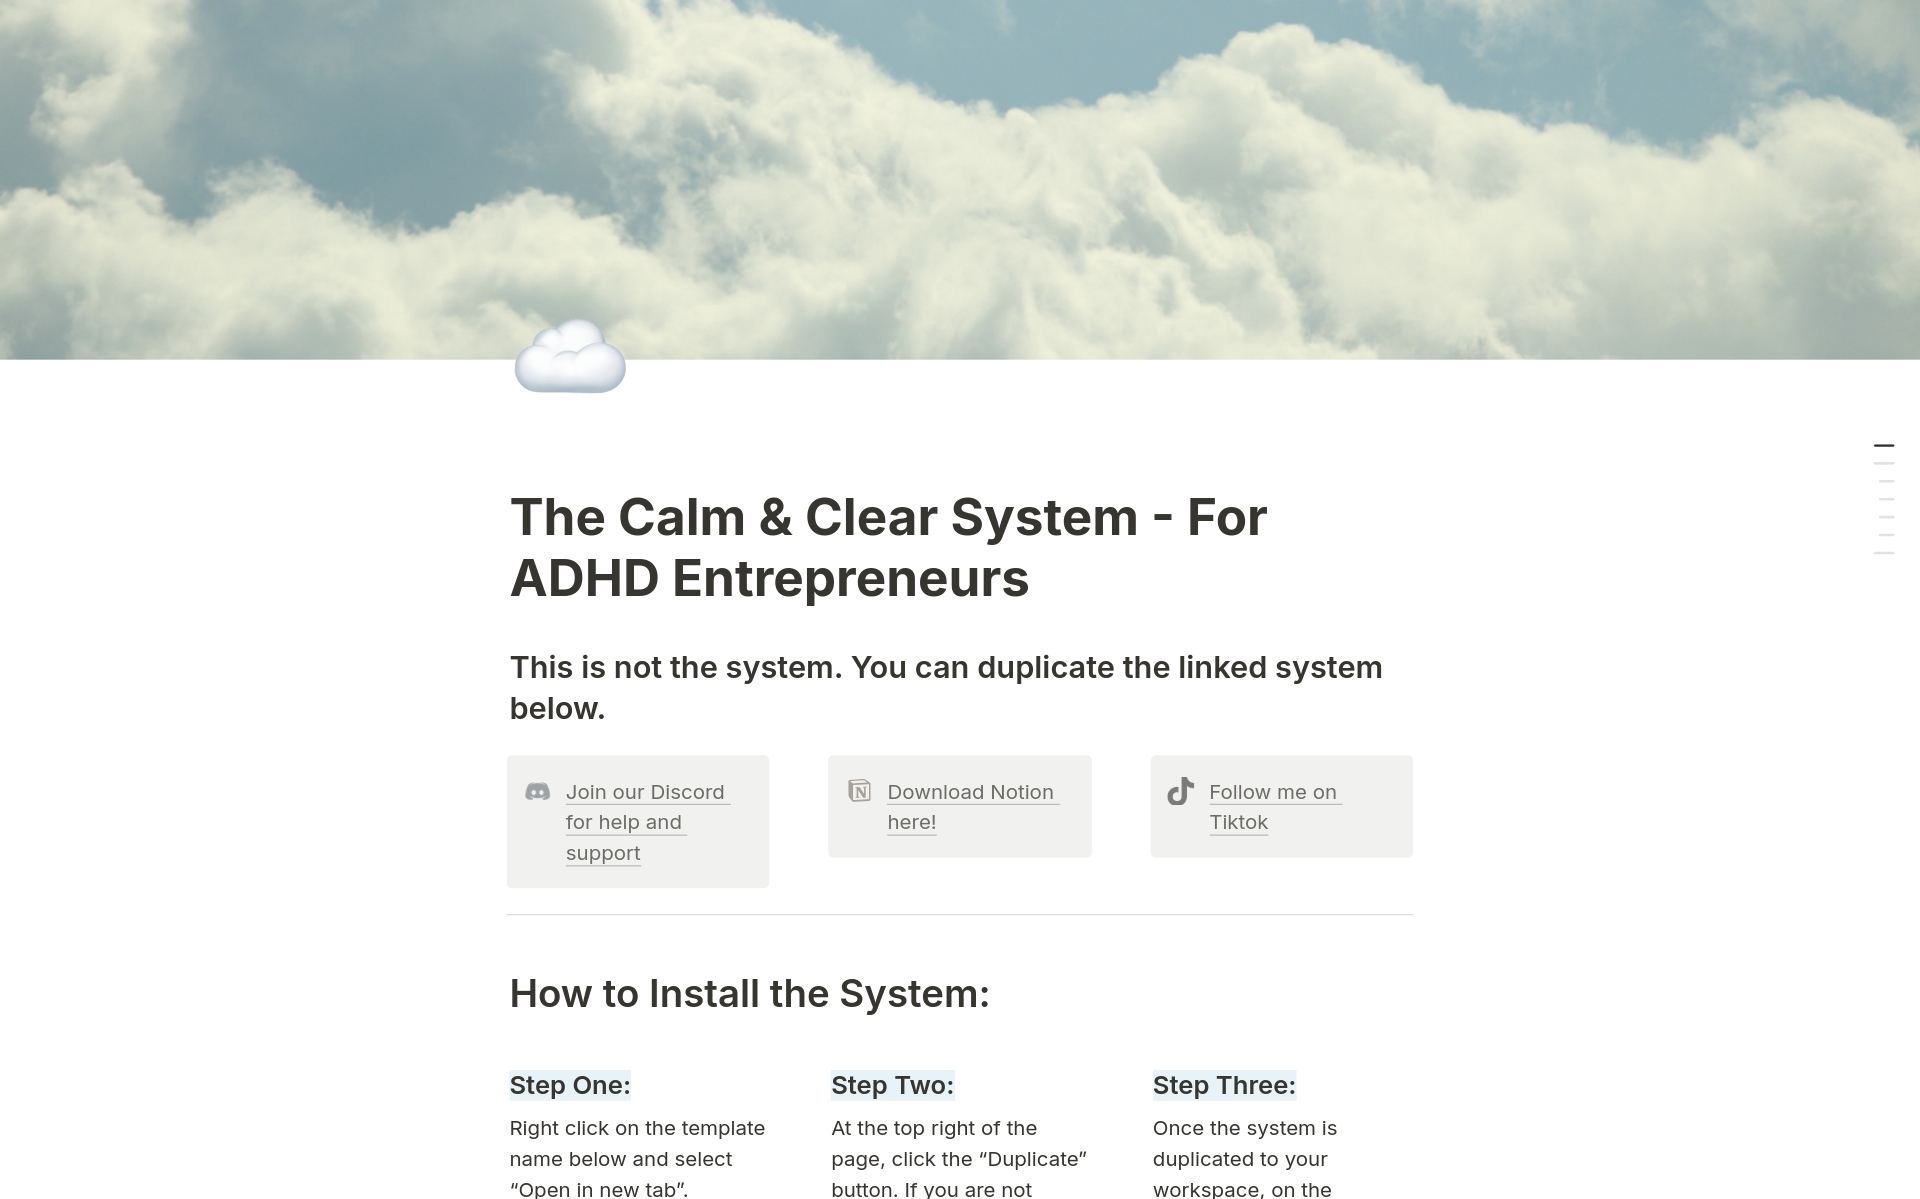 The Calm & Clear System - For ADHD Entrepreneurs님의 템플릿 미리보기